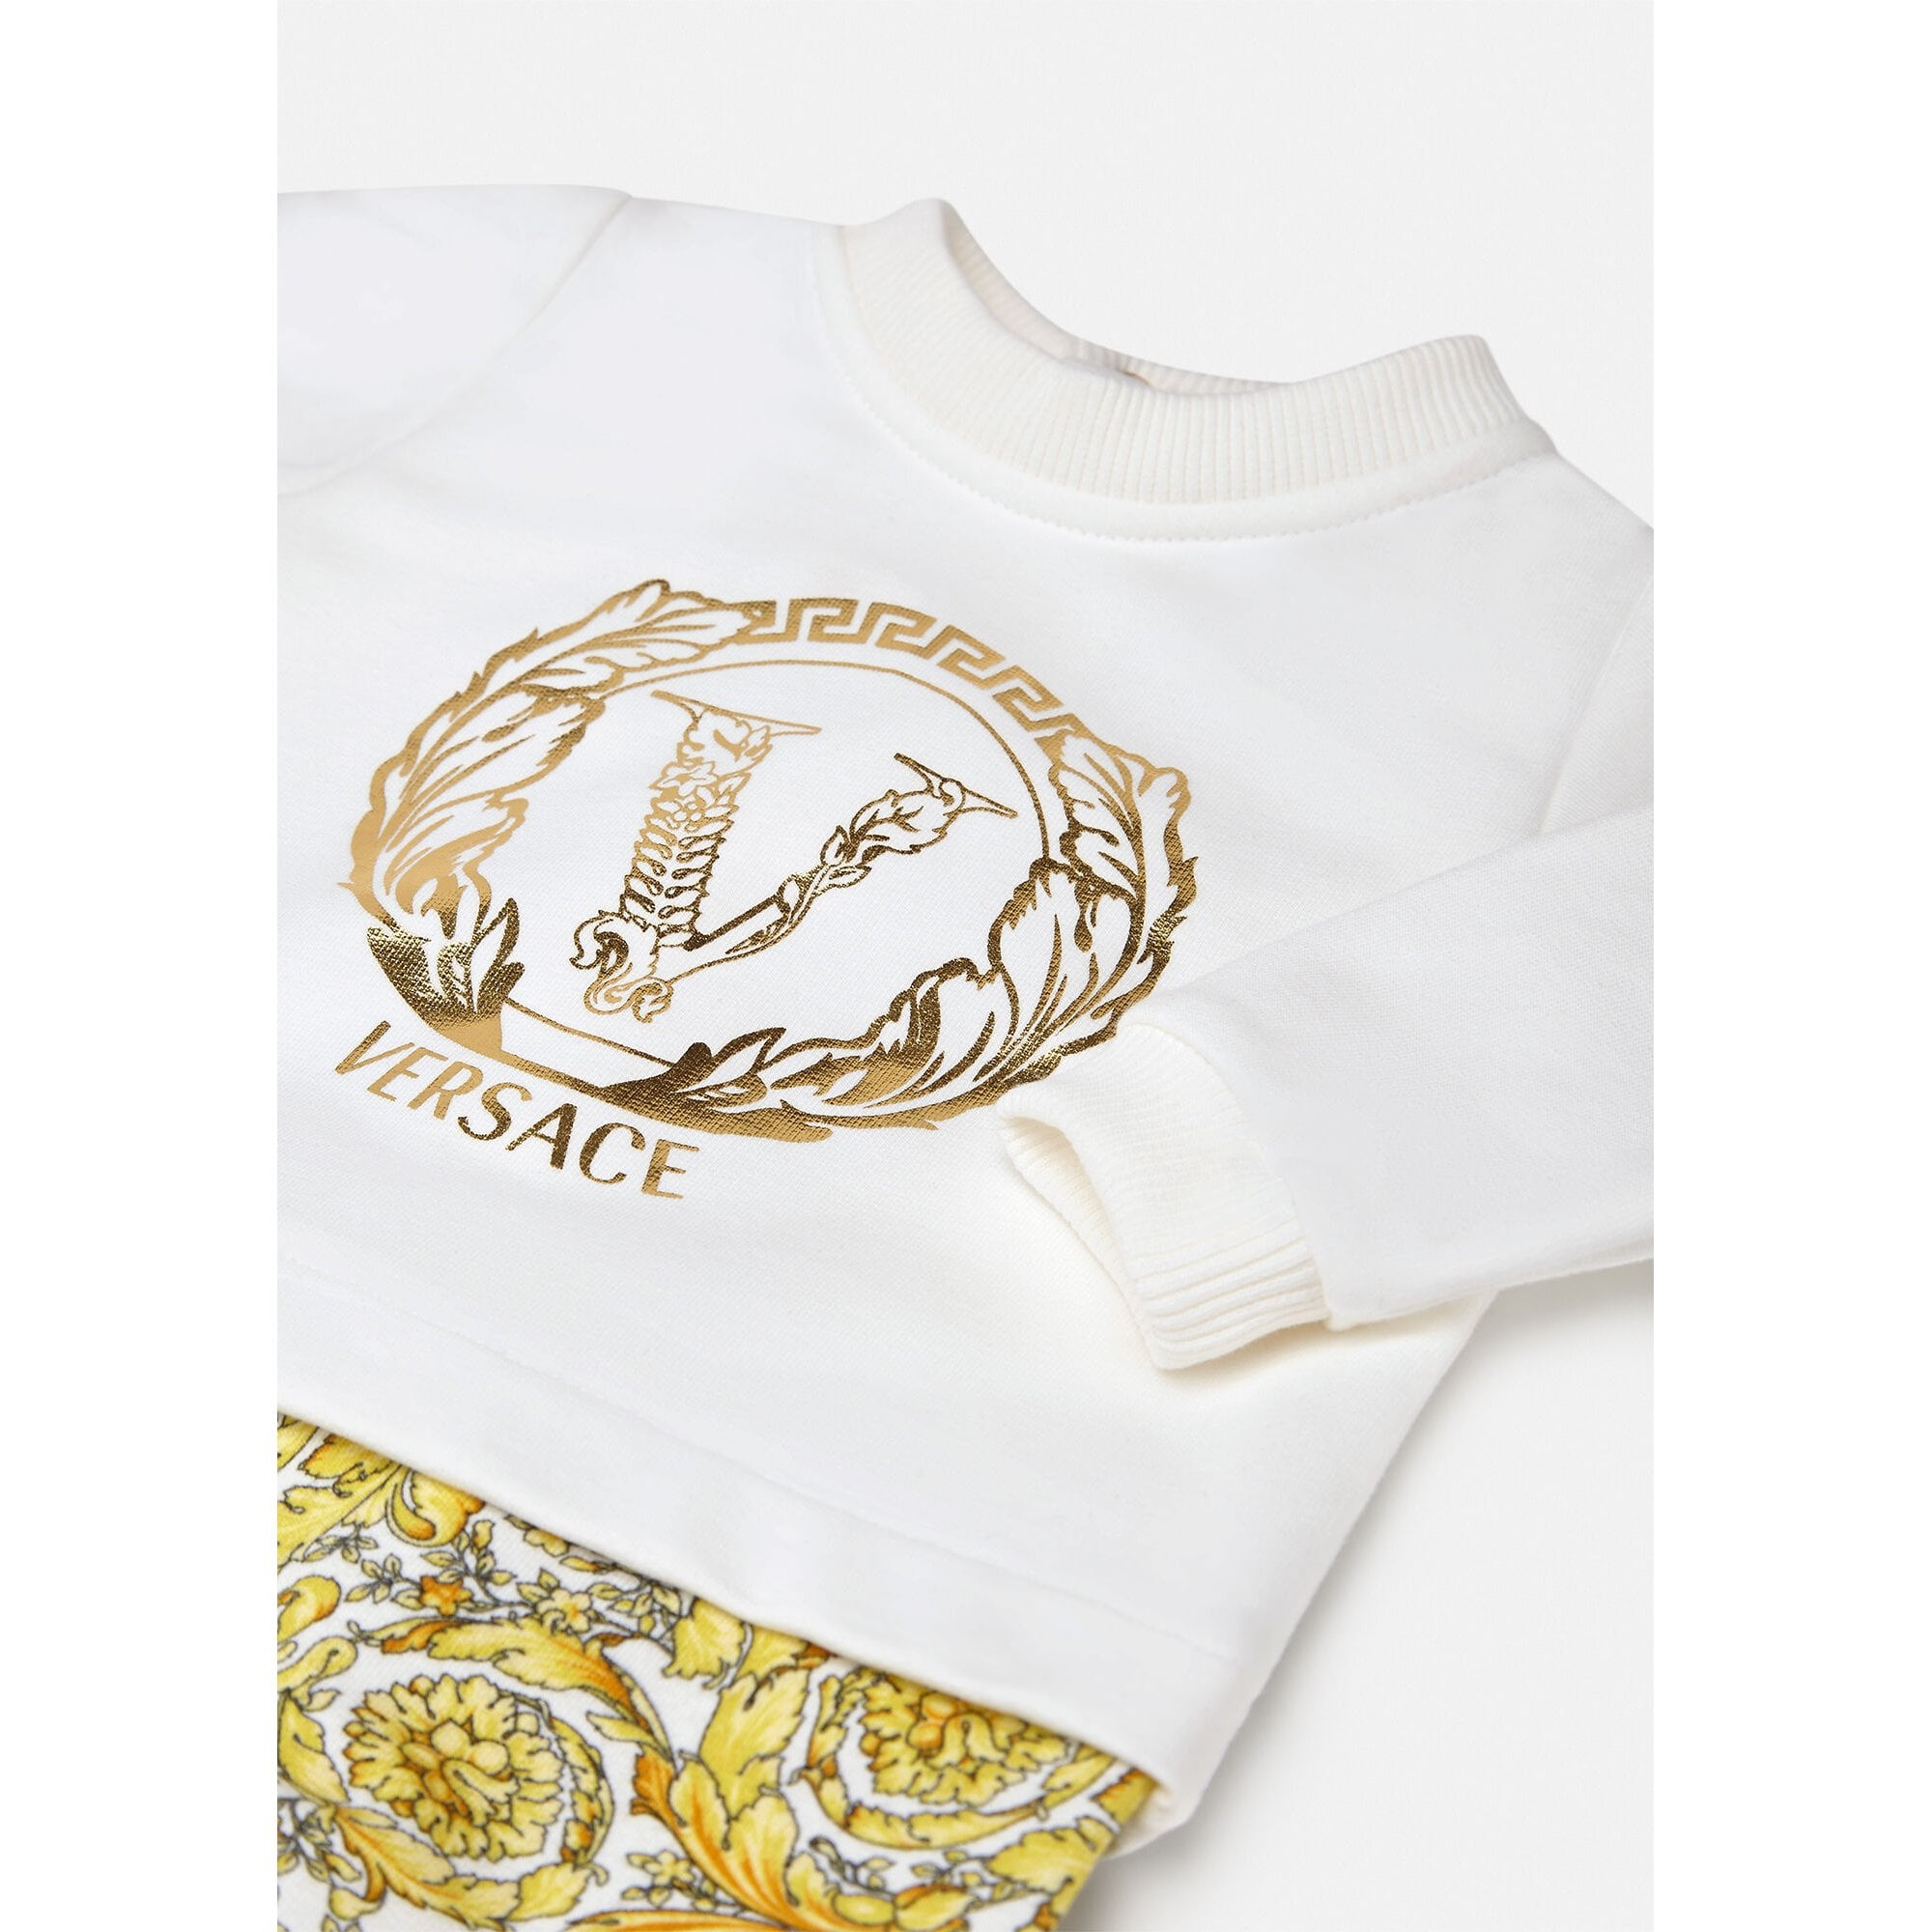 Versace Boys Barocco Print Baby-Grow White &amp; Gold